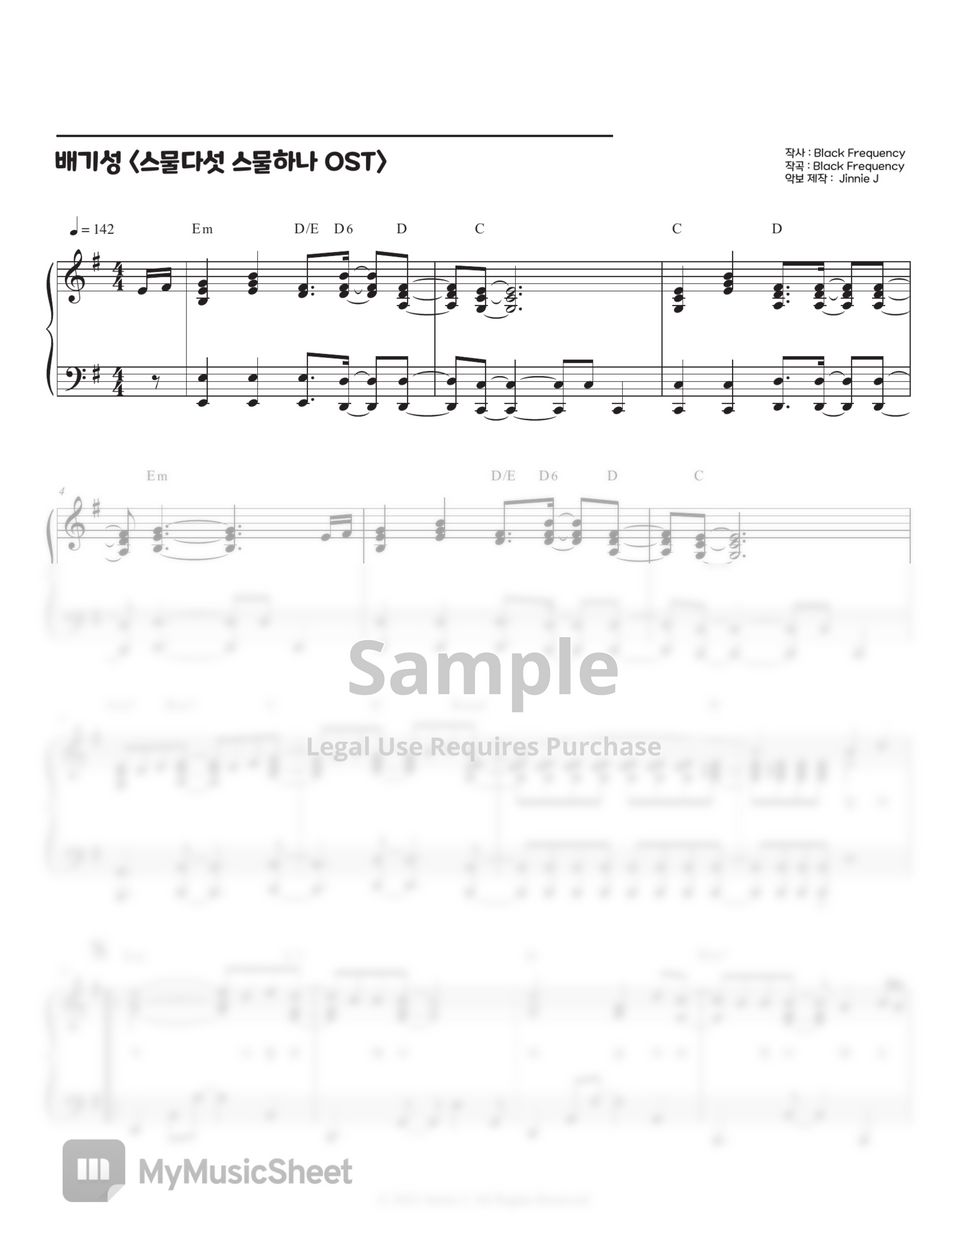 Bae Ki Sung - I'll Shine On You (Twenty Five Twenty One OST) by Jinnie J